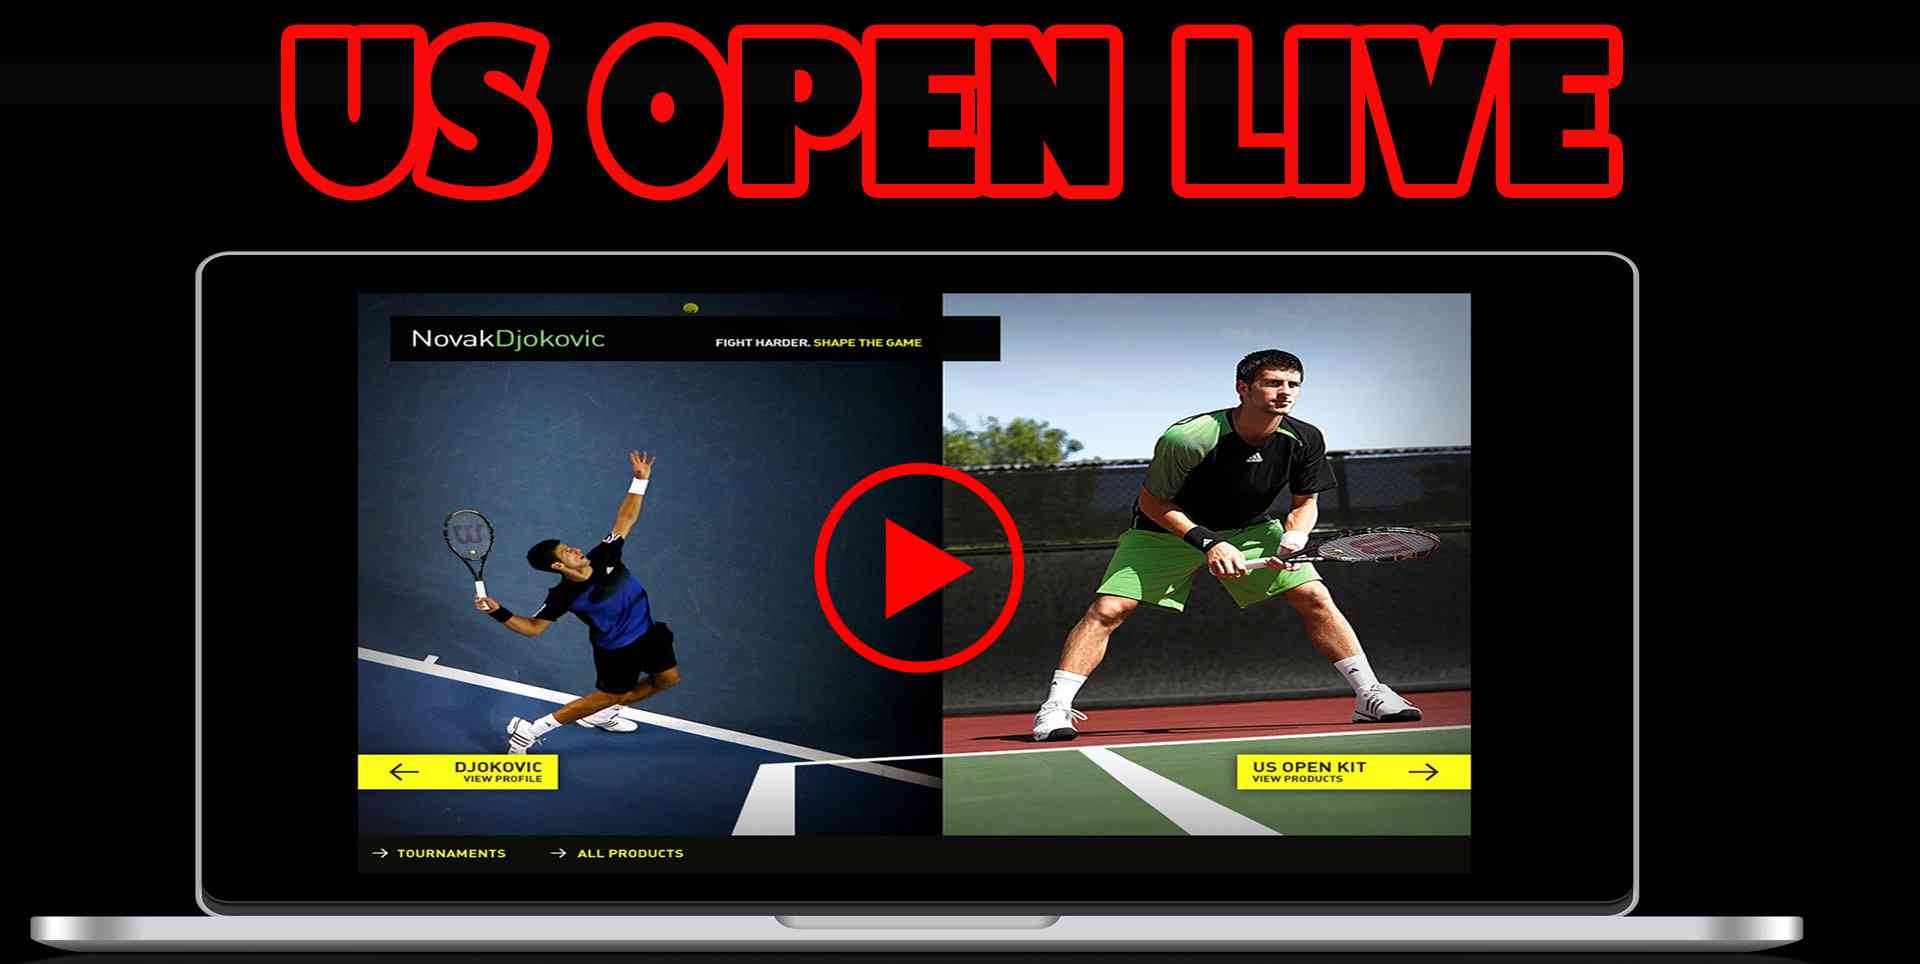 watc-us-open-c-wozniacki-vs-j-loeb-live-tennis